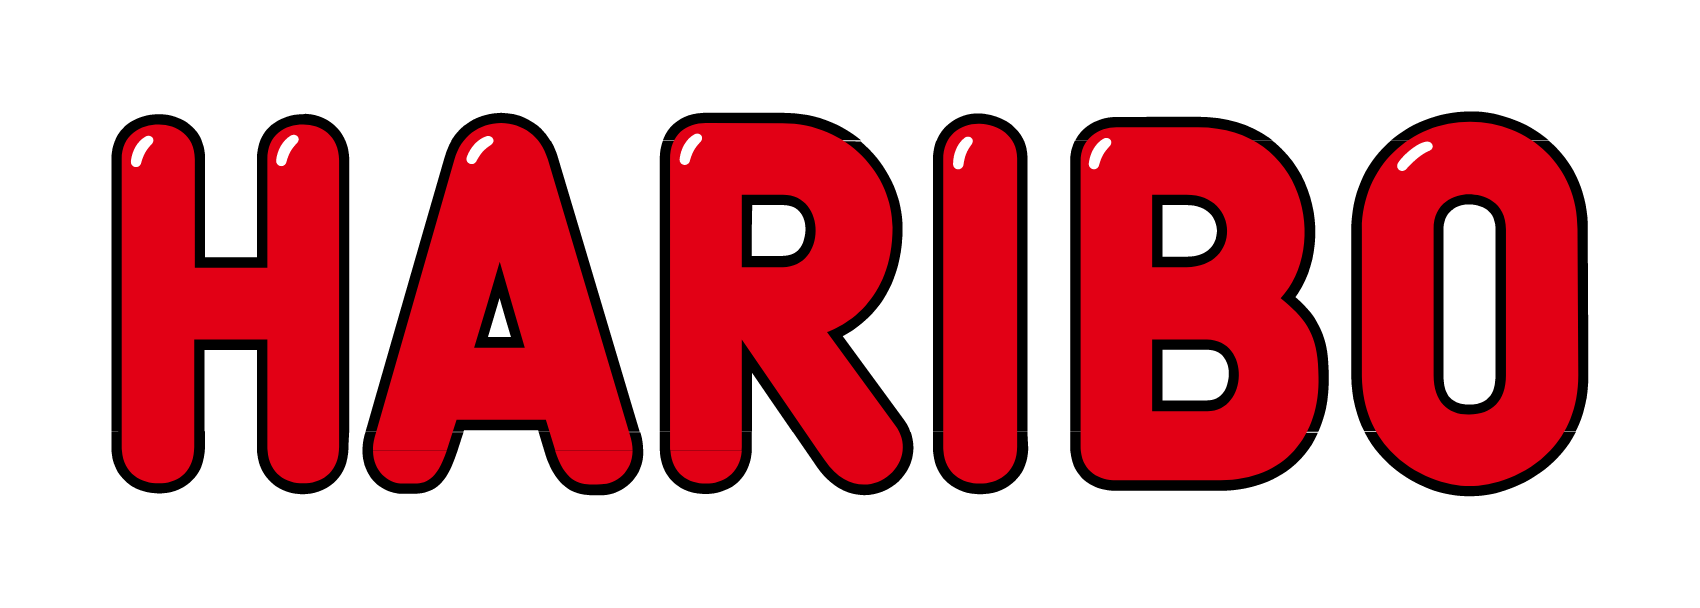 Download Haribo emboss Logo PNG and Vector (PDF, SVG, Ai, EPS) Free